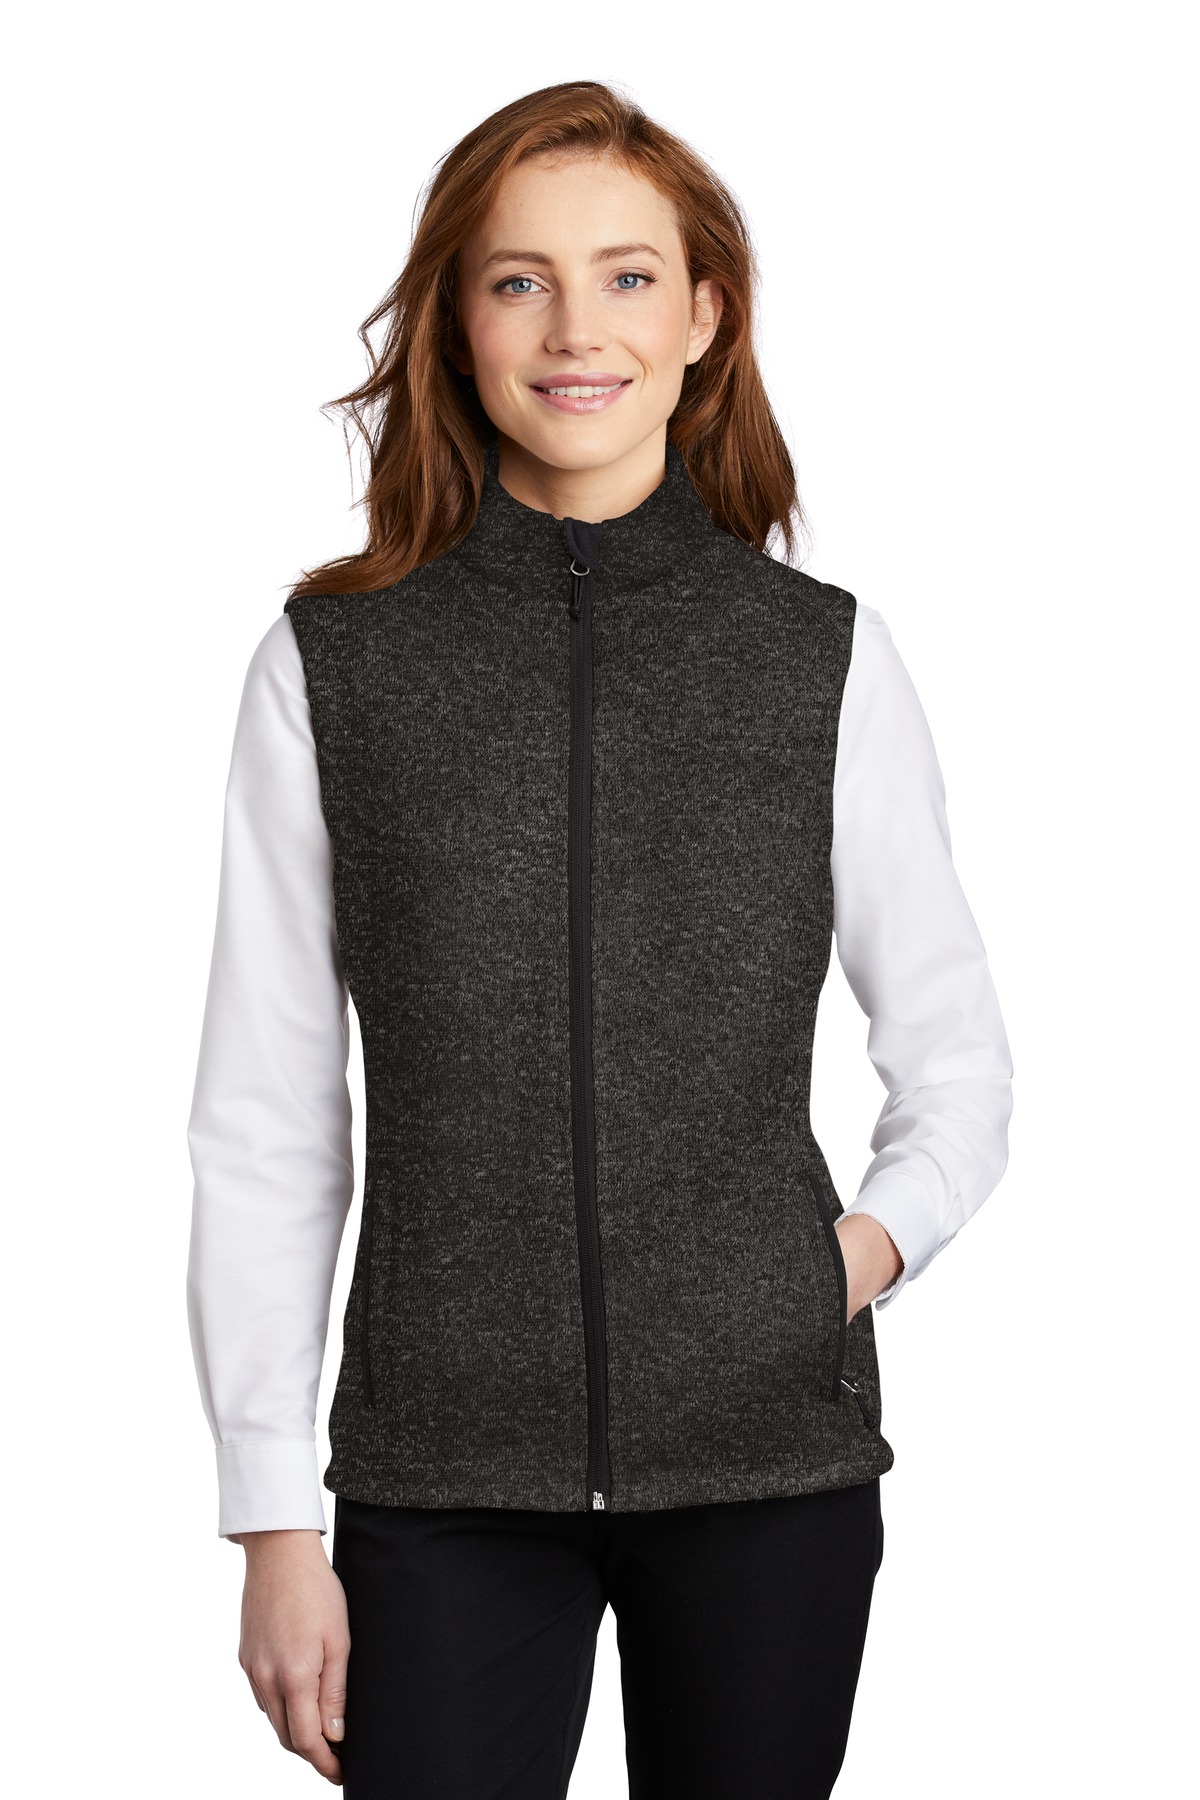 Port Authority Outerwear, Sweat shirts & Fleece for Hospitality ® Ladies Sweater Fleece Vest-Port Authority